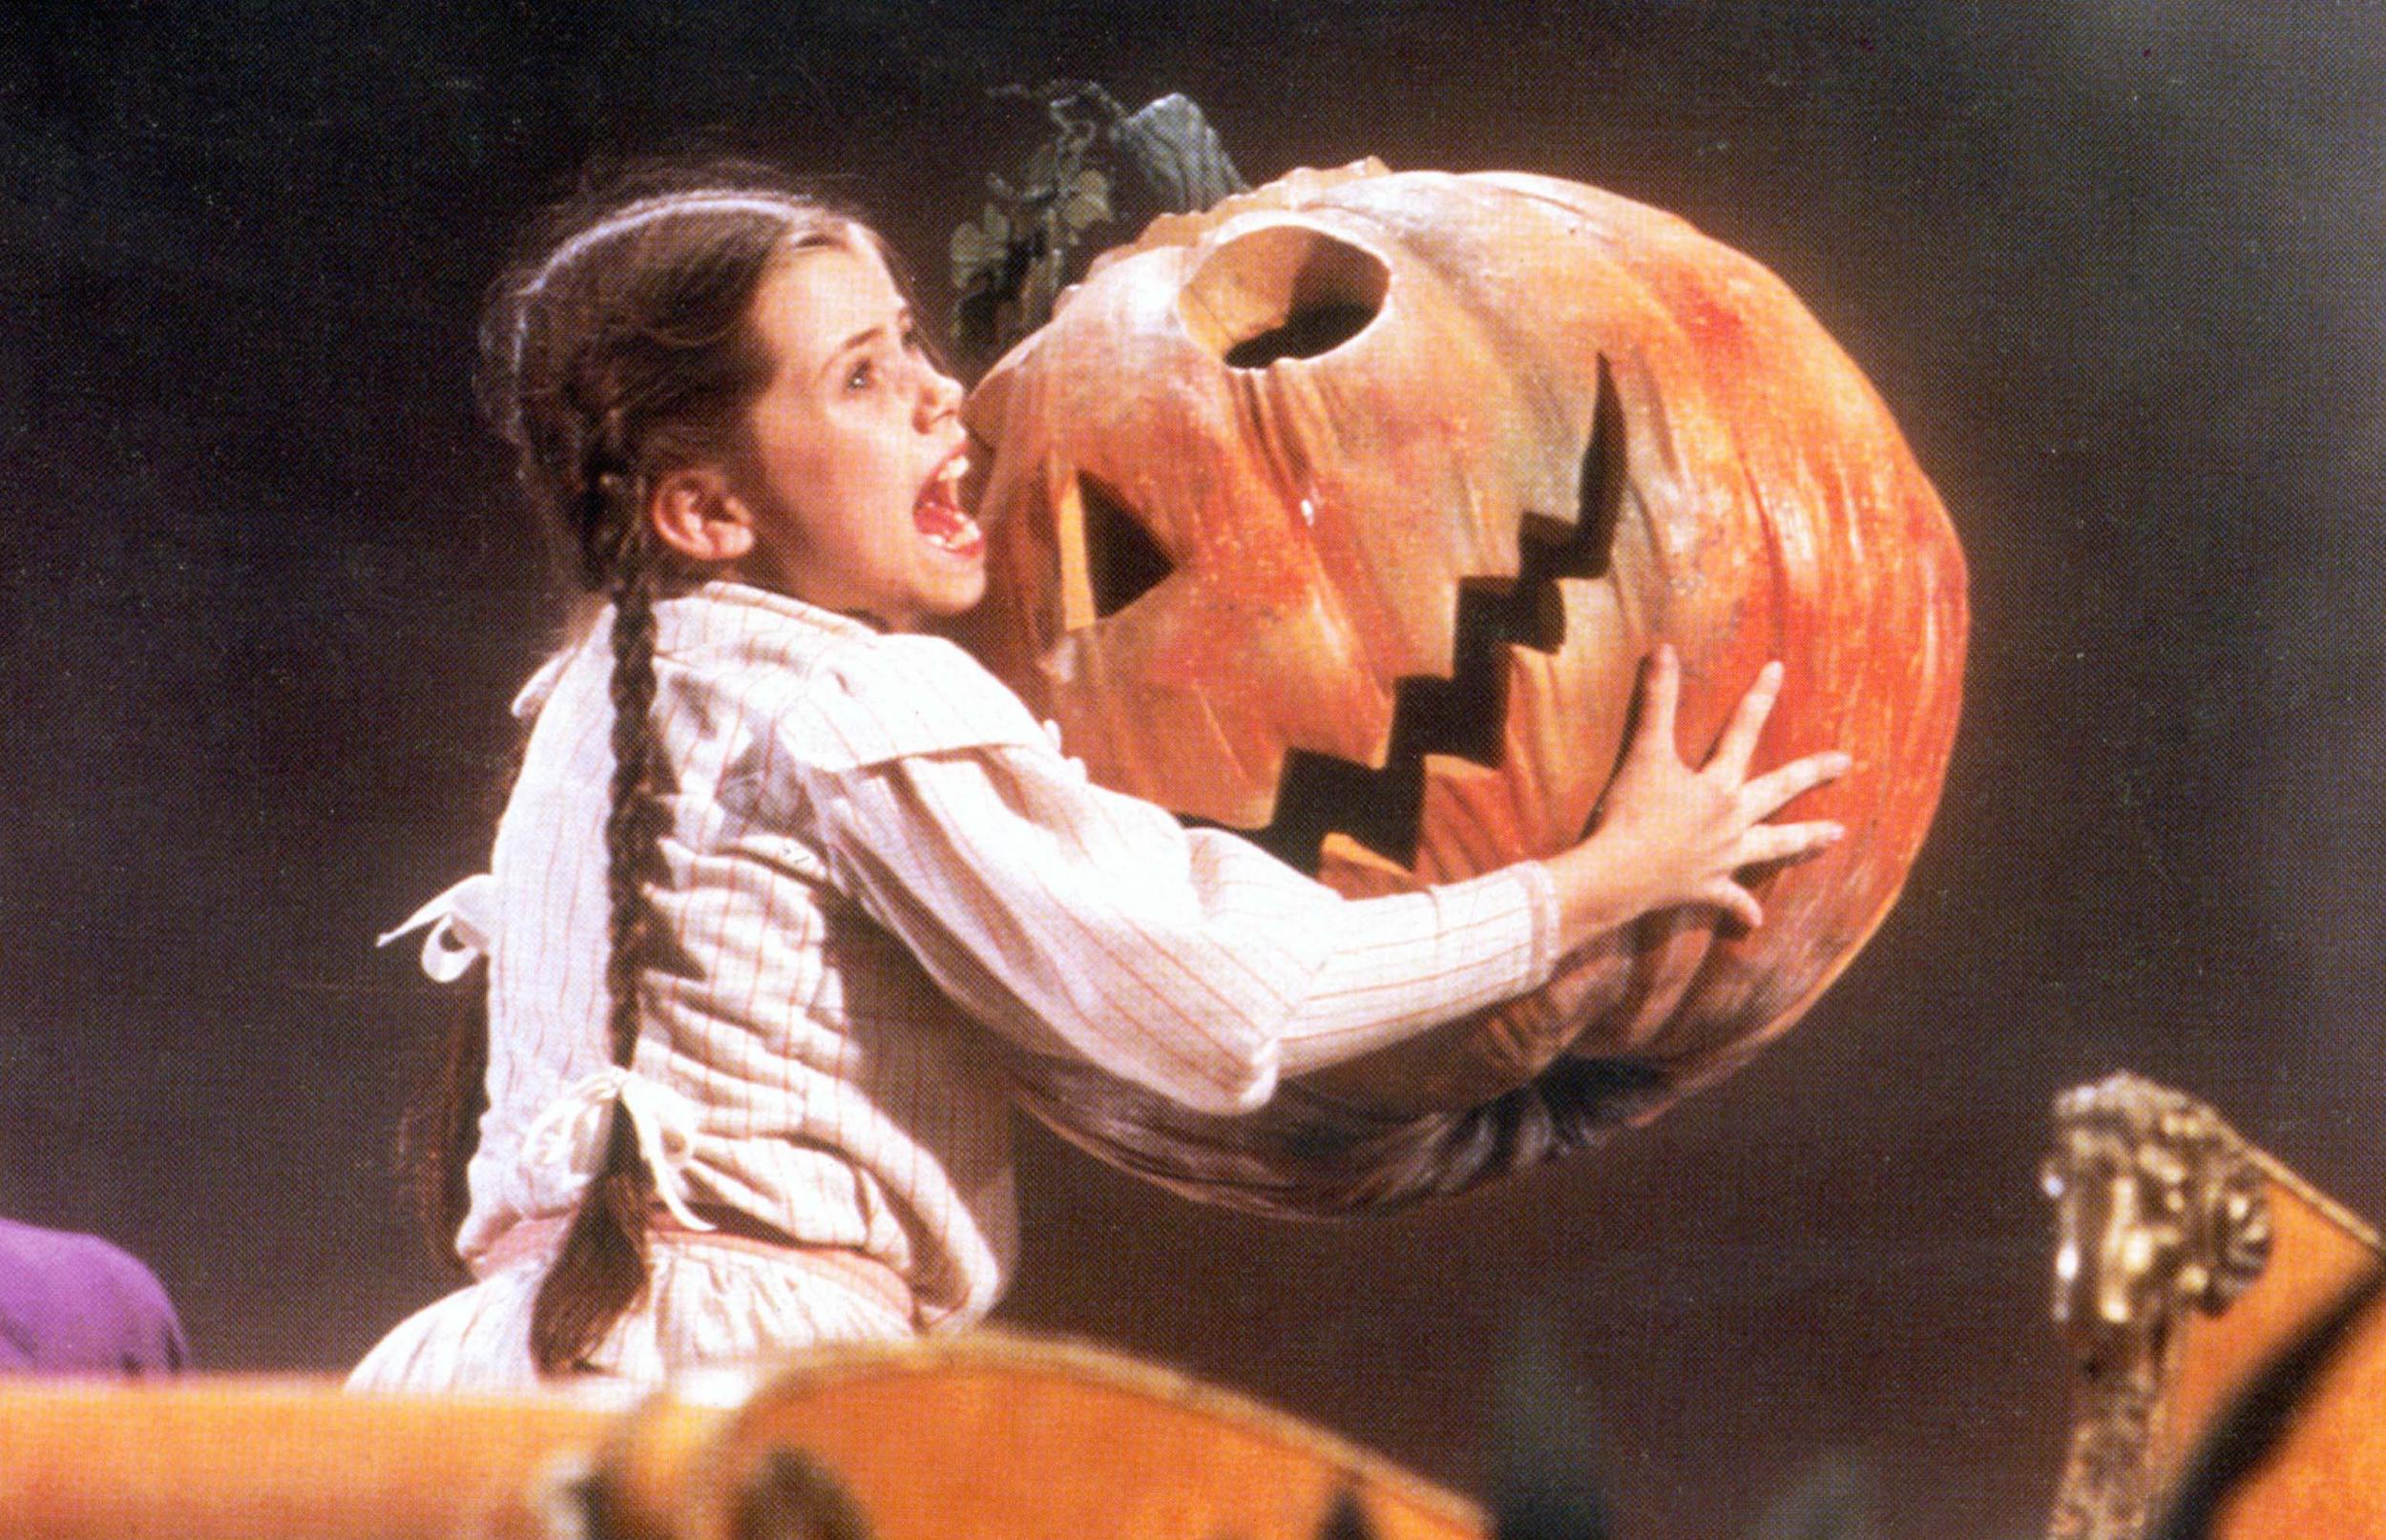 Fairuza Balk with a pumpkin in Return To Oz, 1985